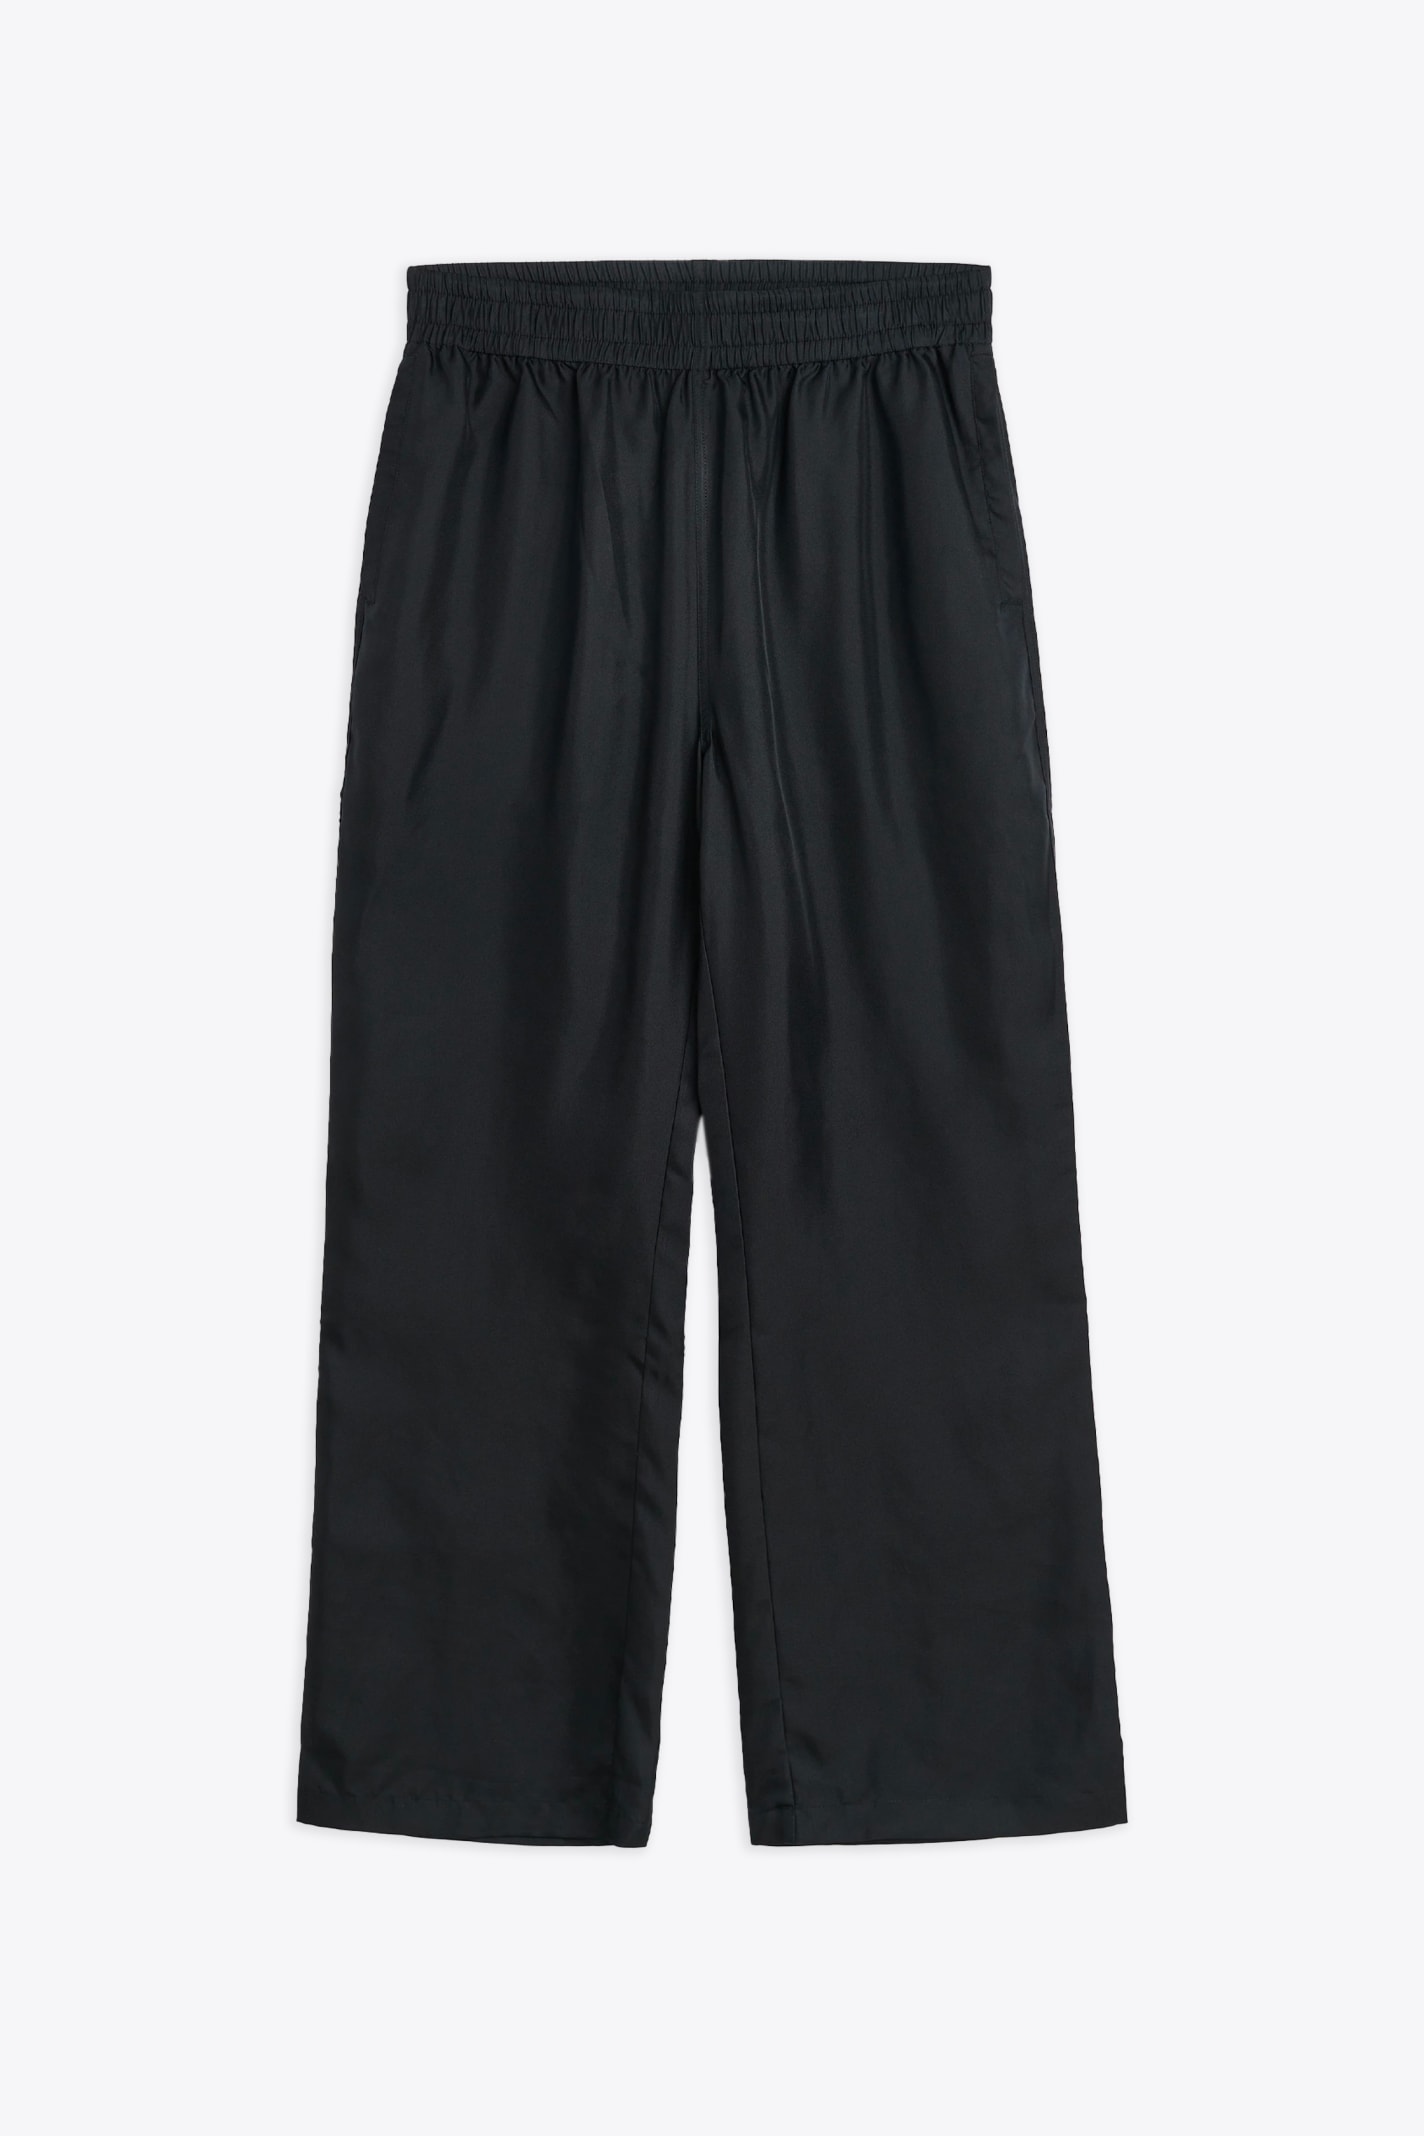 #4133 Black silk pant with elasticated waistband - Silk Pant